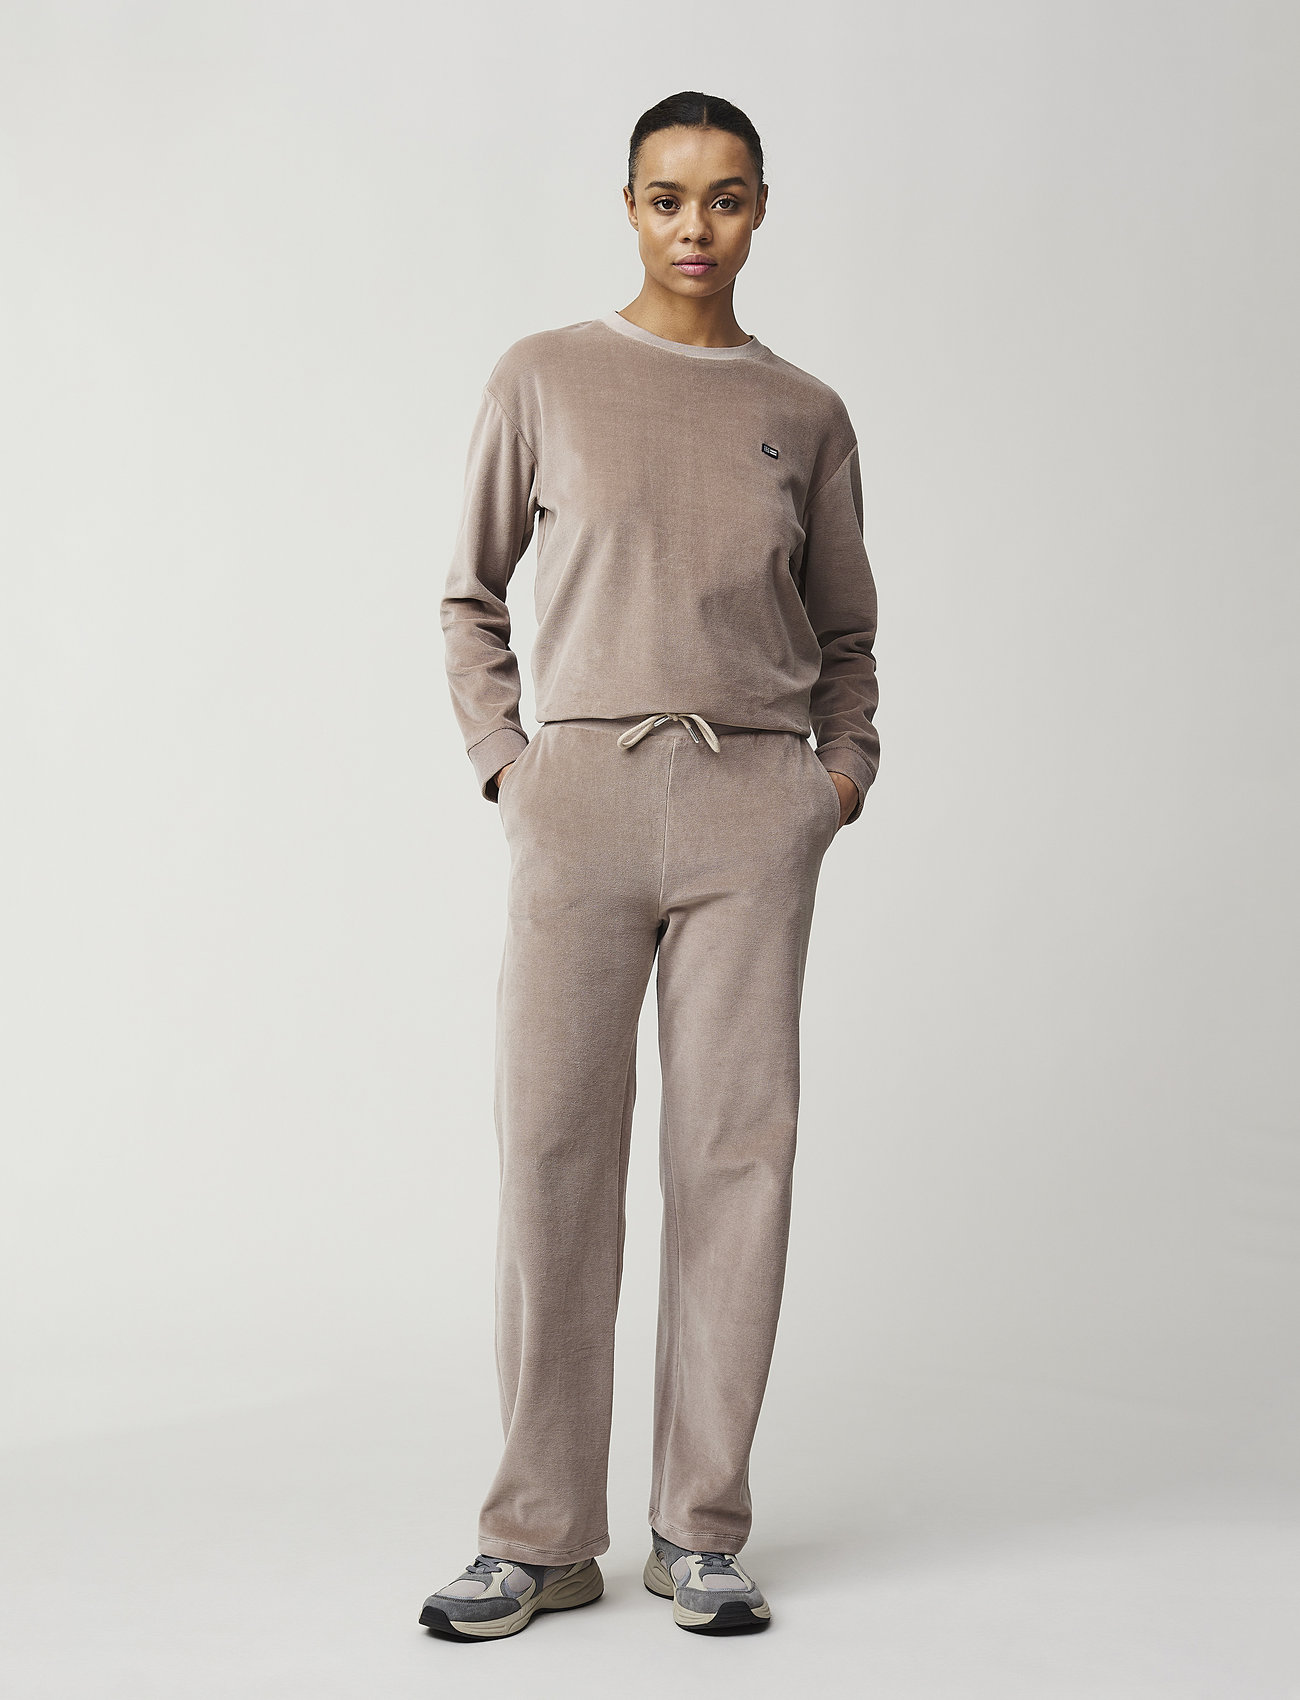 Lexington Clothing - Leona Organic Cotton Velour Pants - jogginghosen - light brown - 1